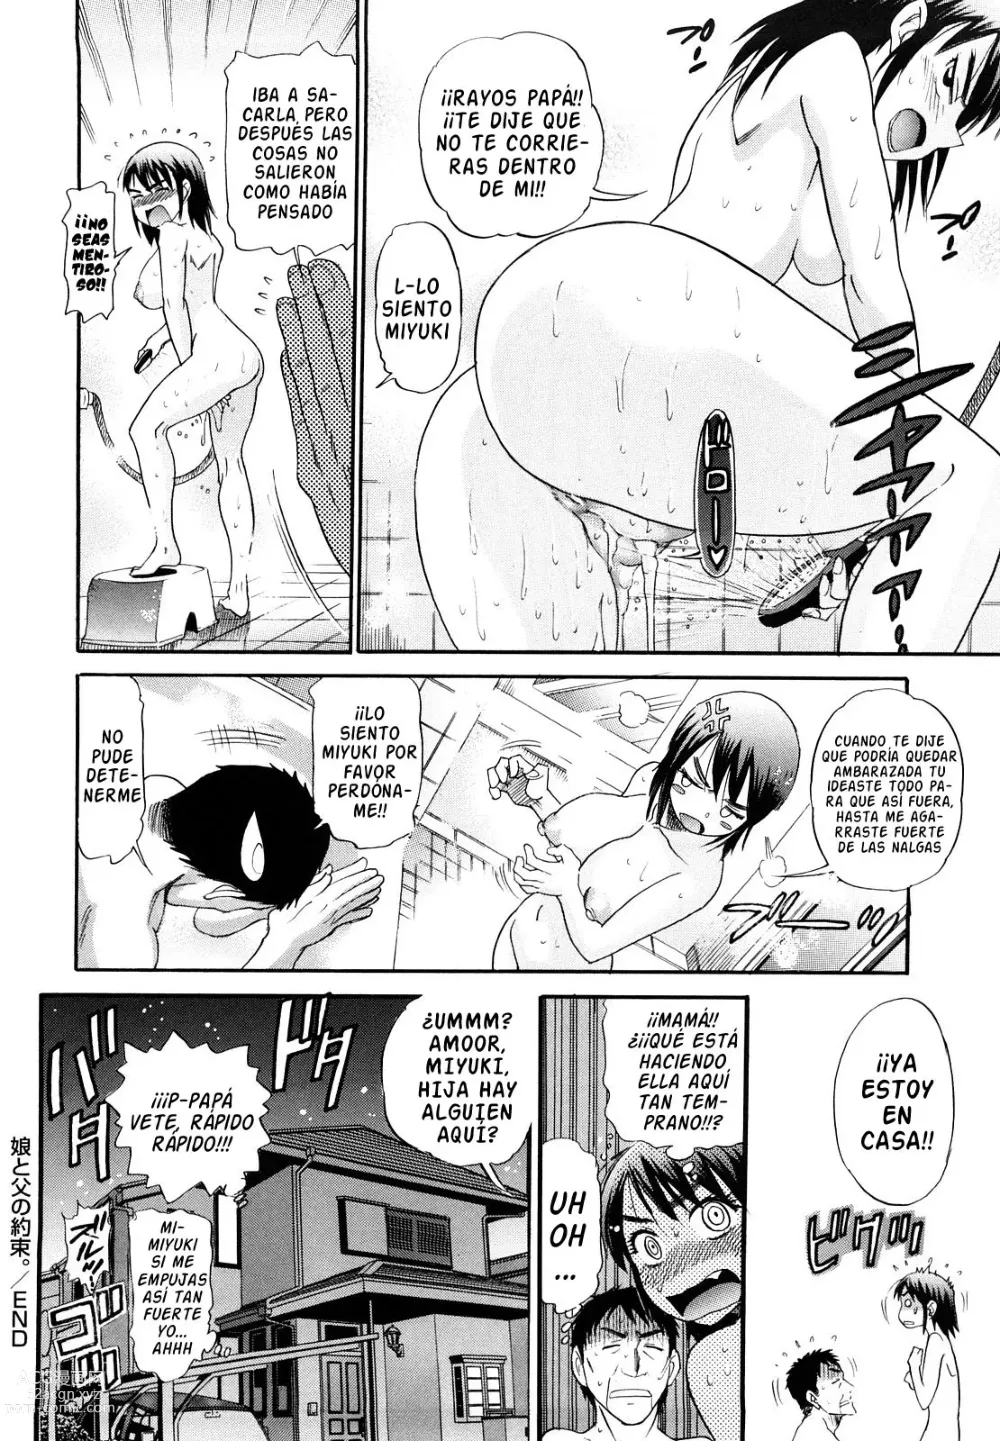 Page 209 of manga HHH Triple